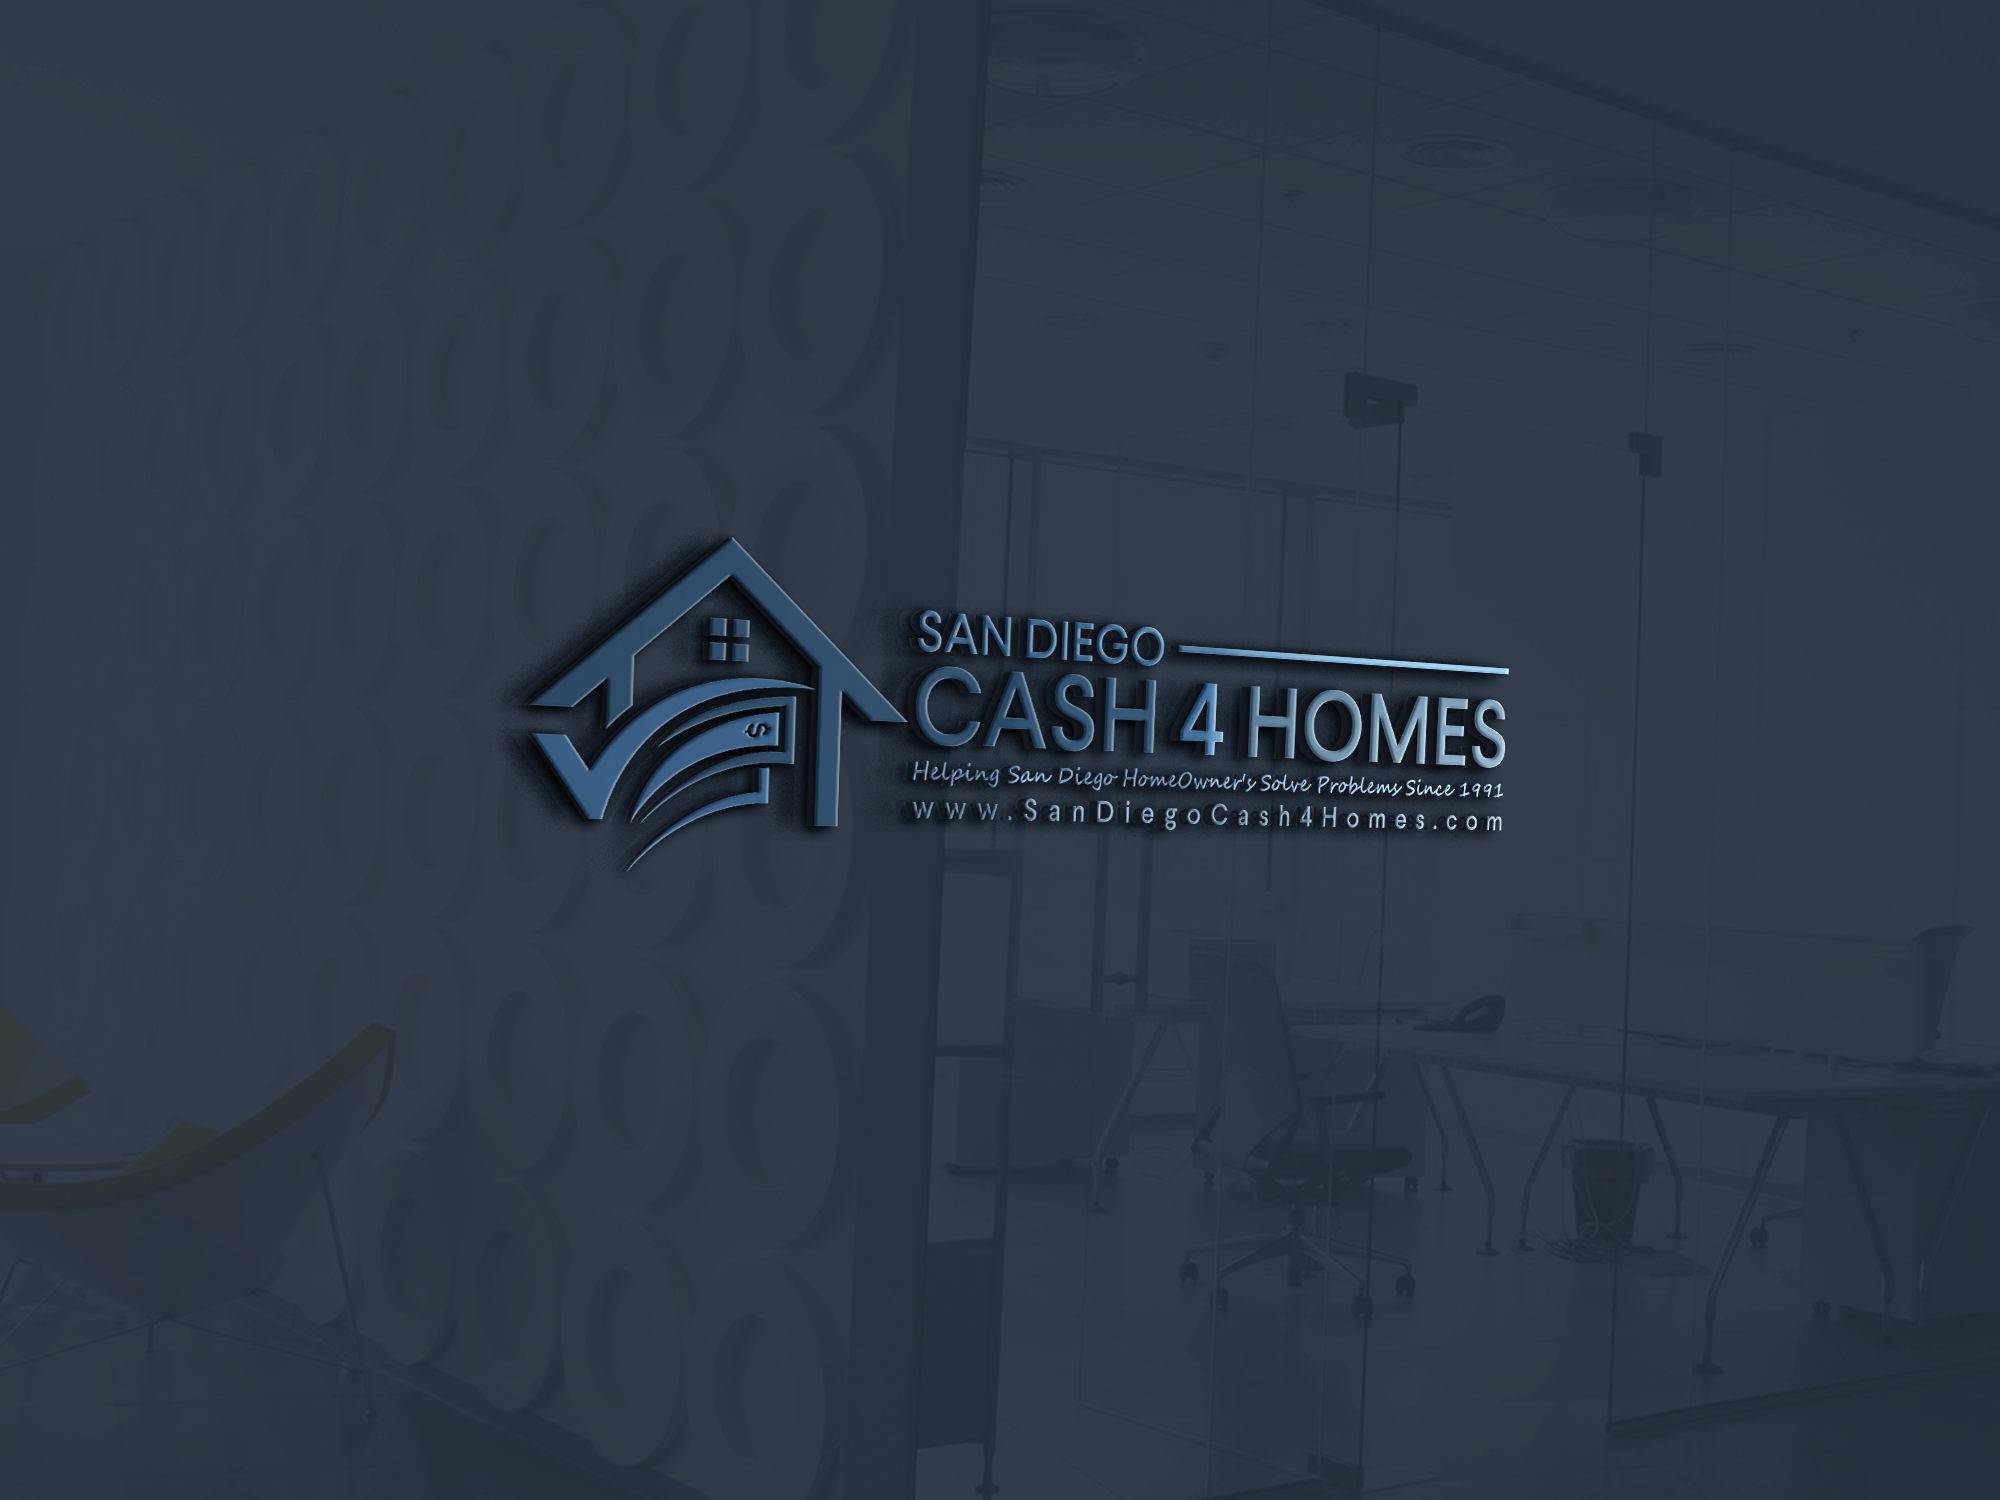 San Diego Cash 4 Homes